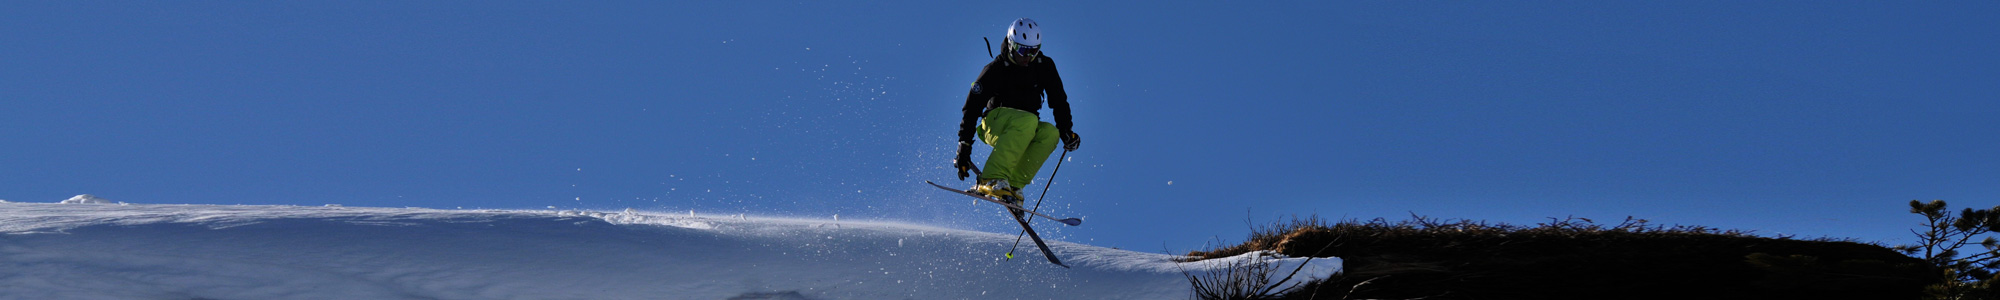 slide-ski-01